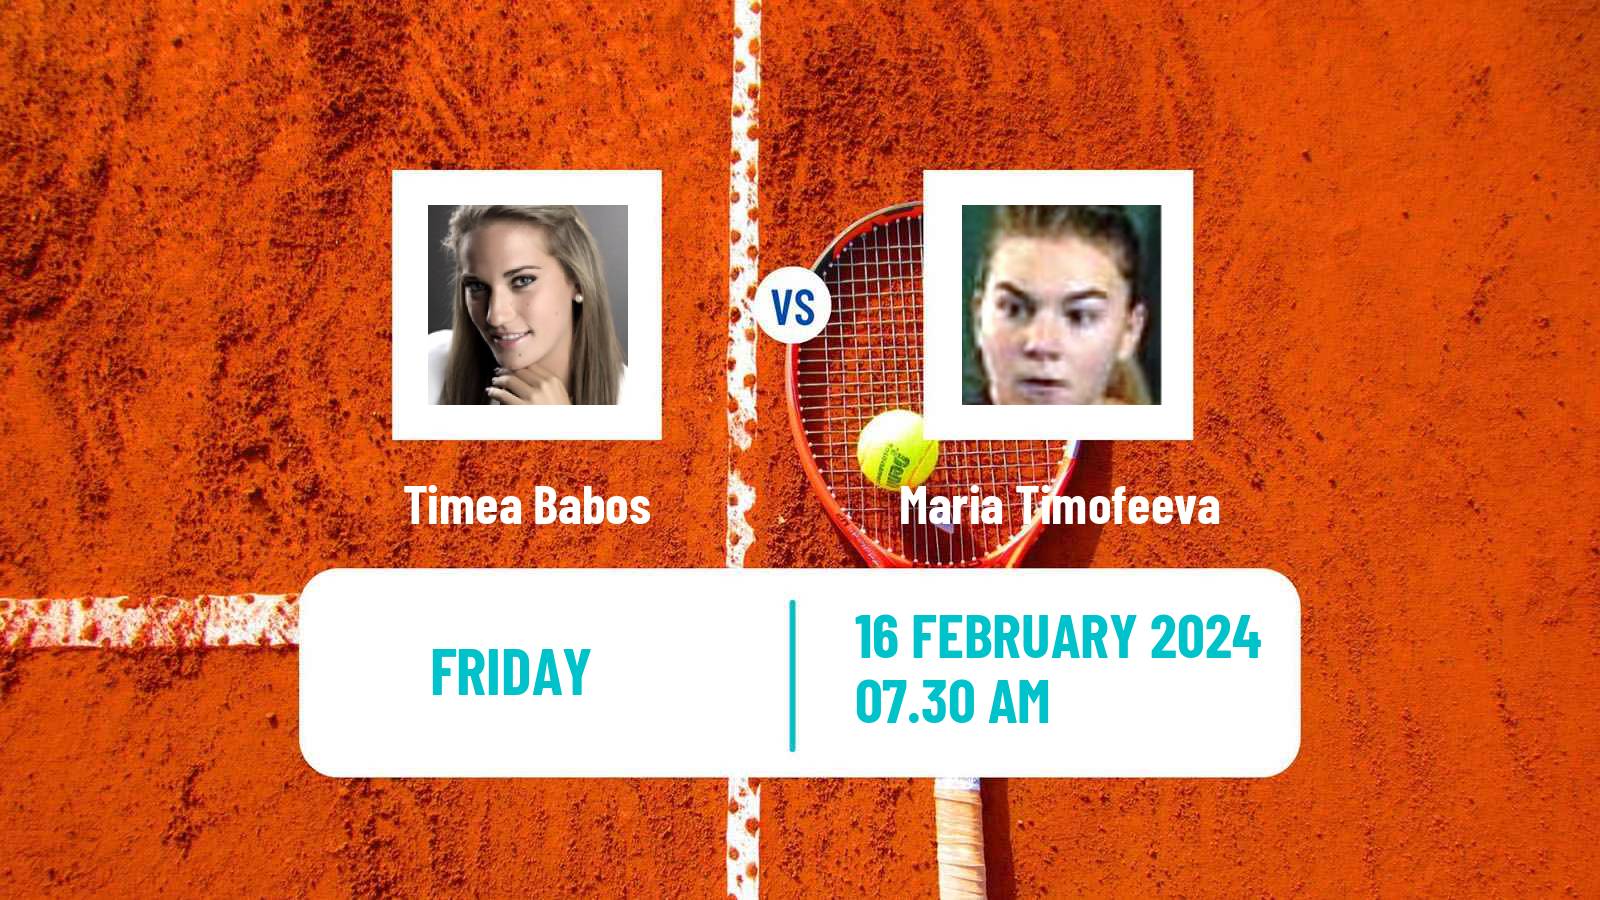 Tennis WTA Dubai Timea Babos - Maria Timofeeva